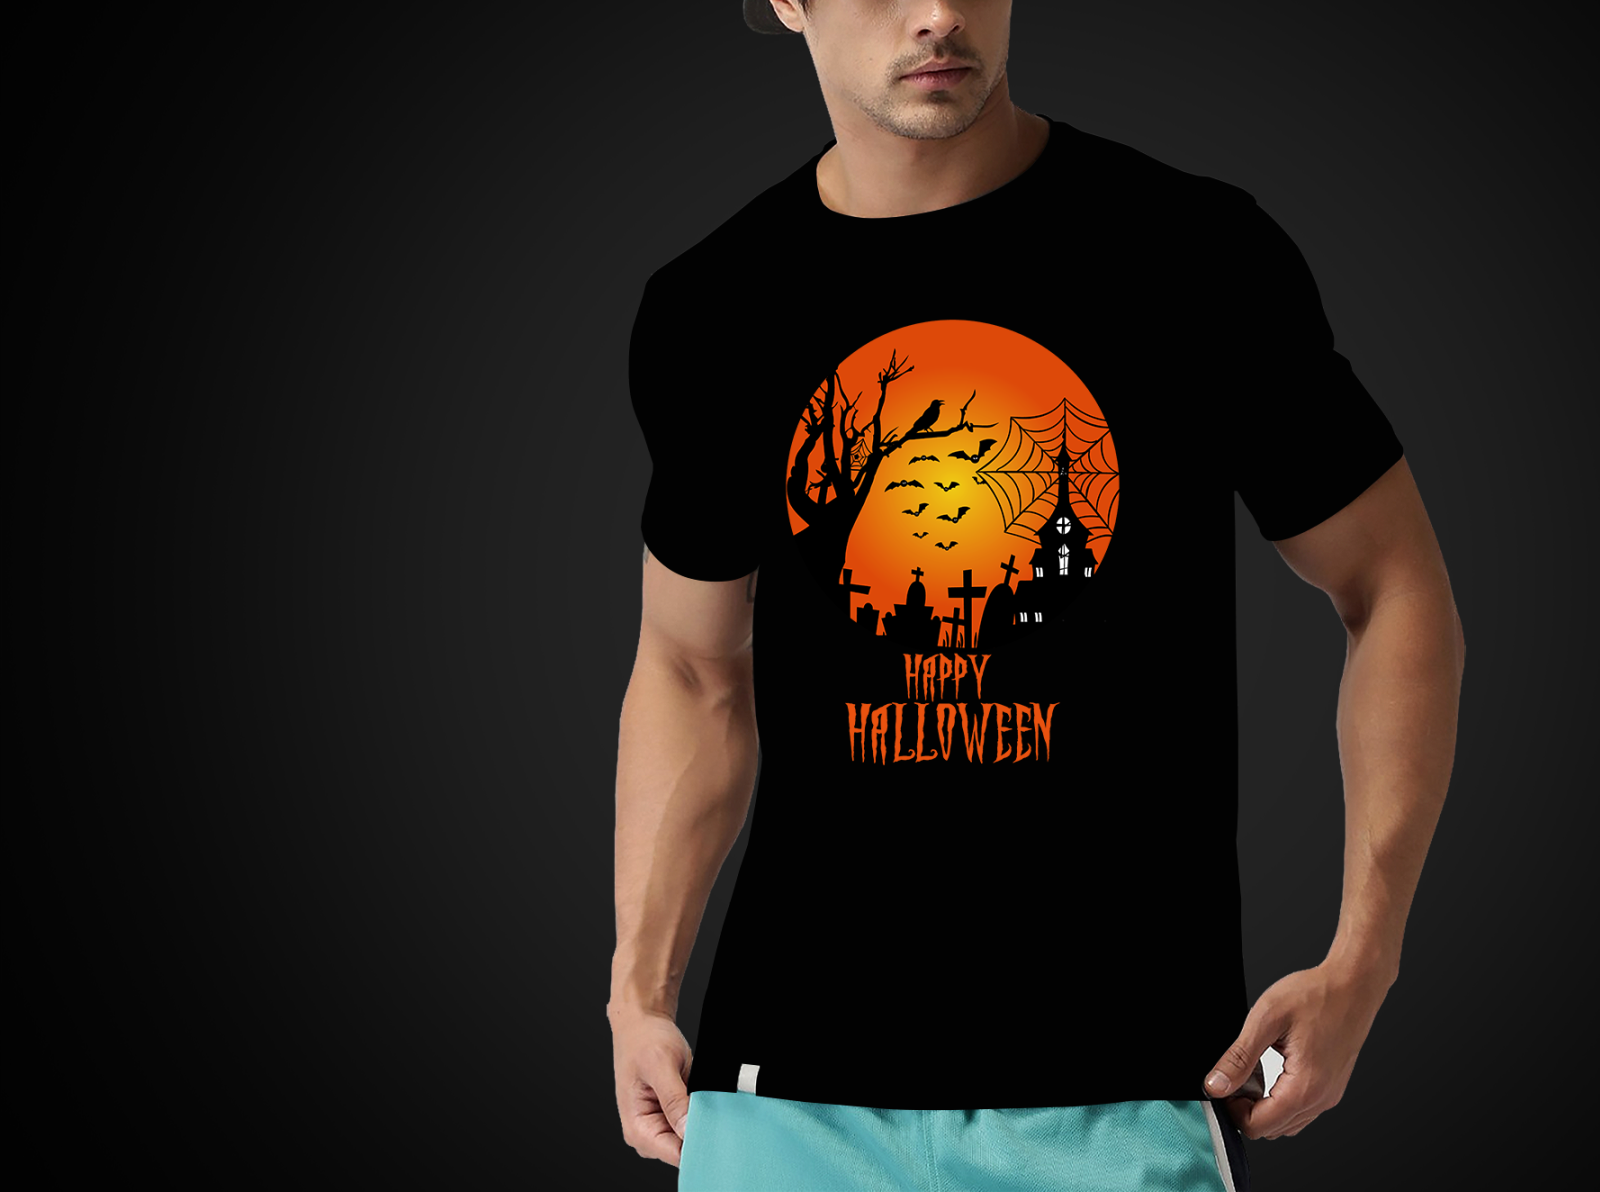 Halloween T Shirt 2020 By Shakil Rahman On Dribbble - roblox shirt designer for hire